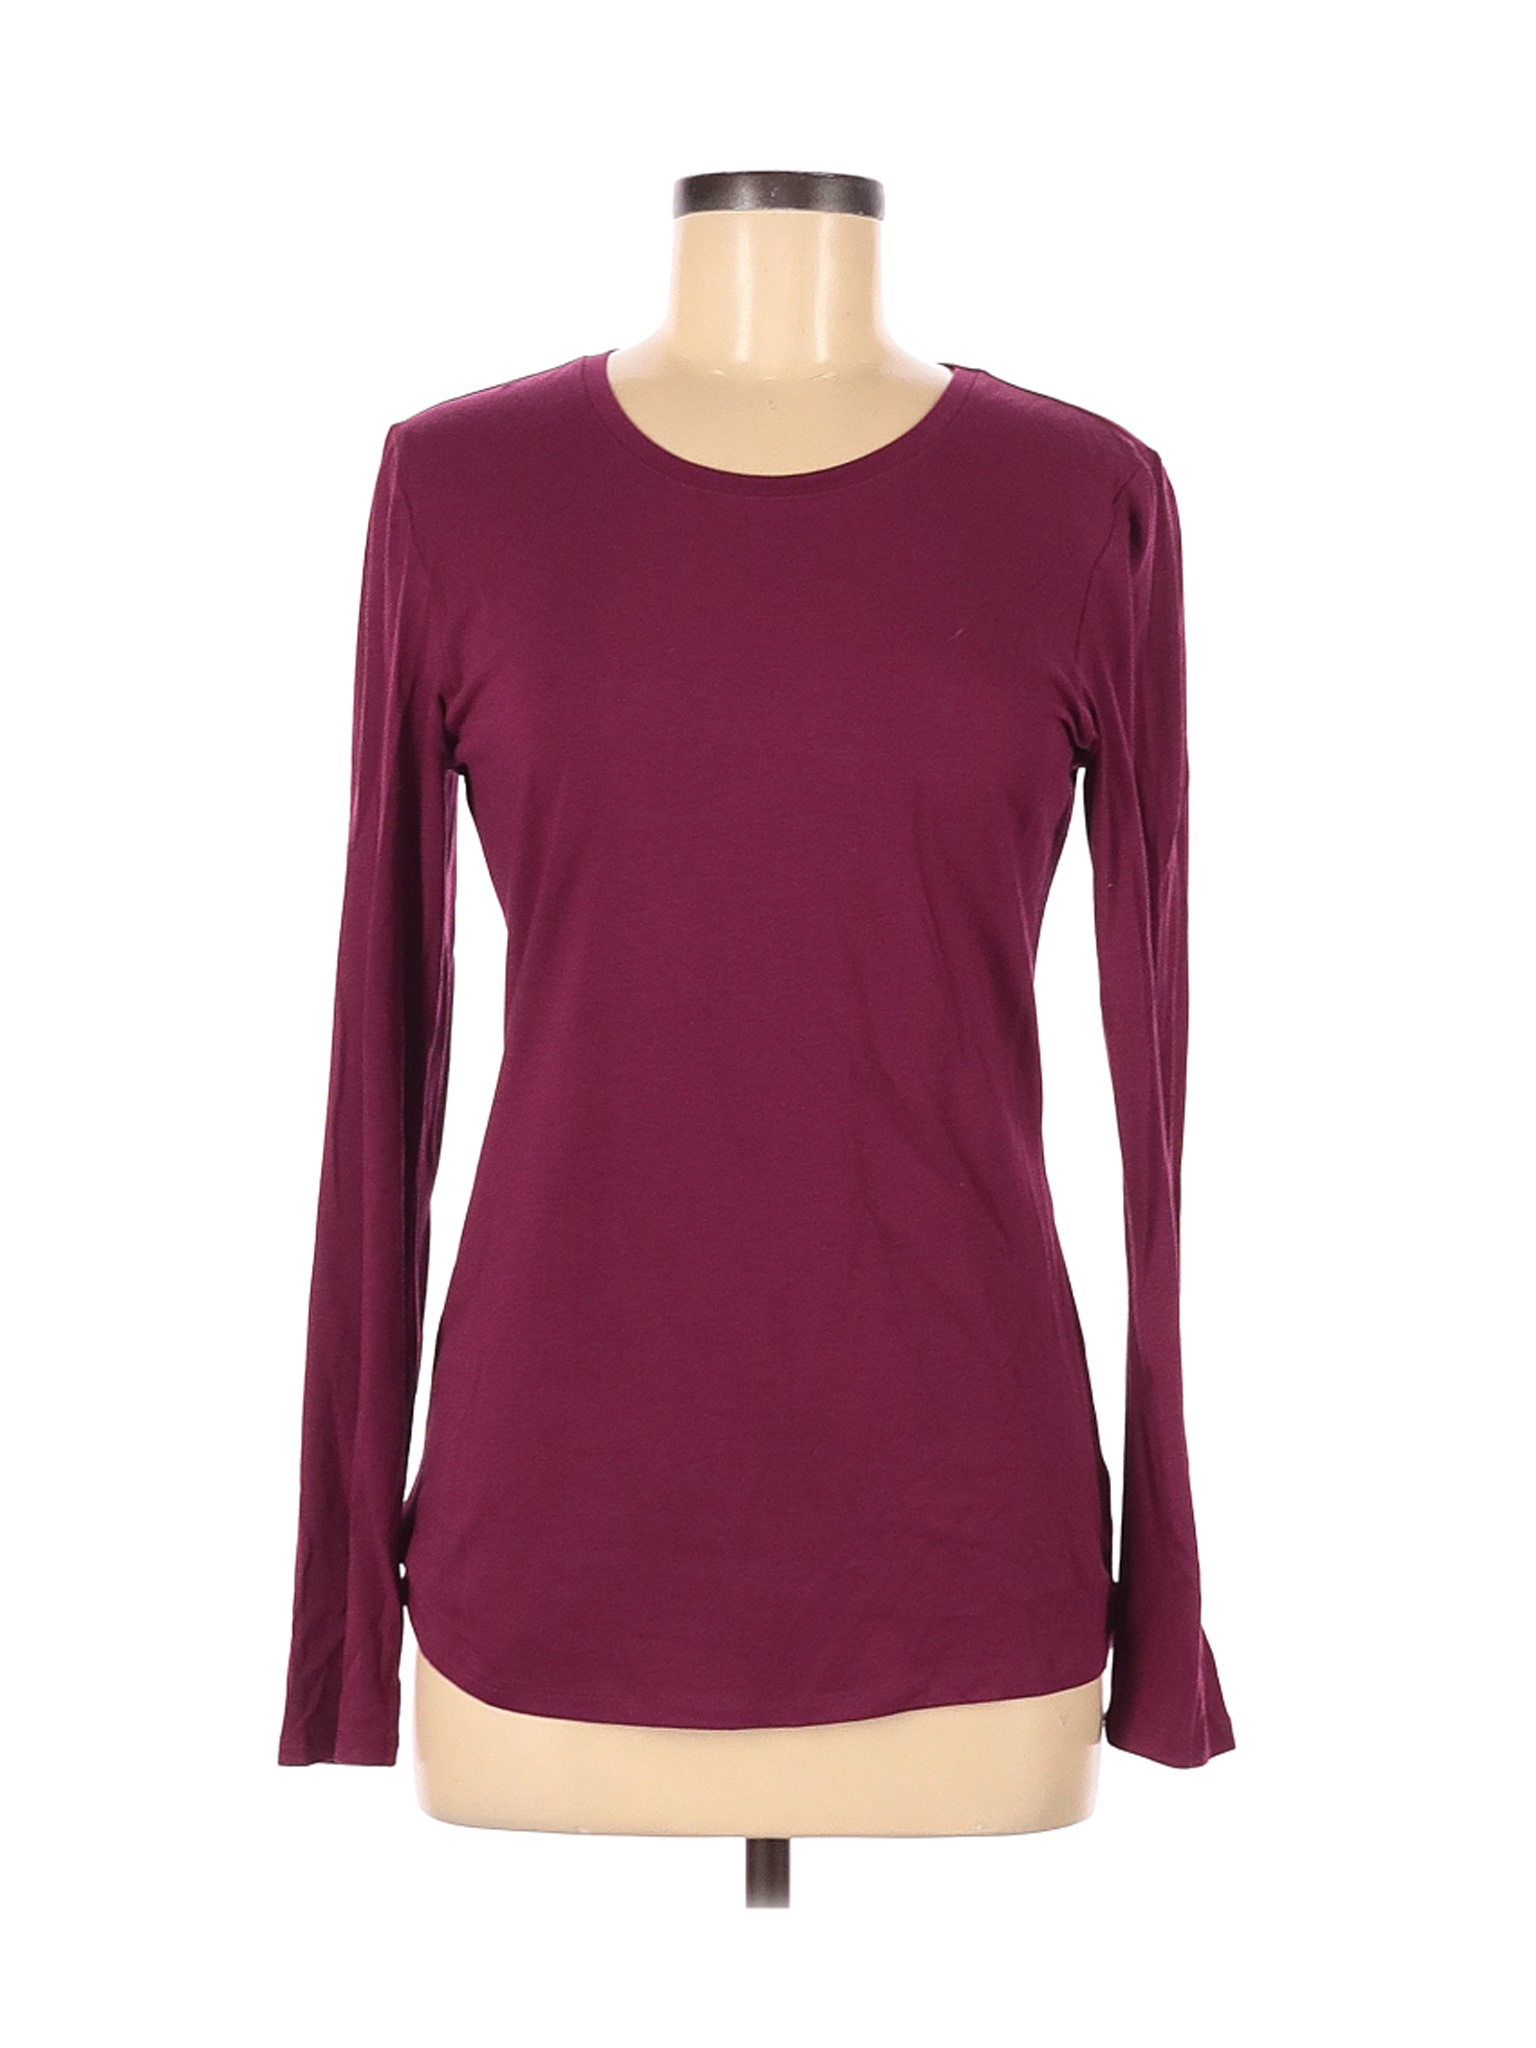 Felina Women Red Long Sleeve T-Shirt M | eBay